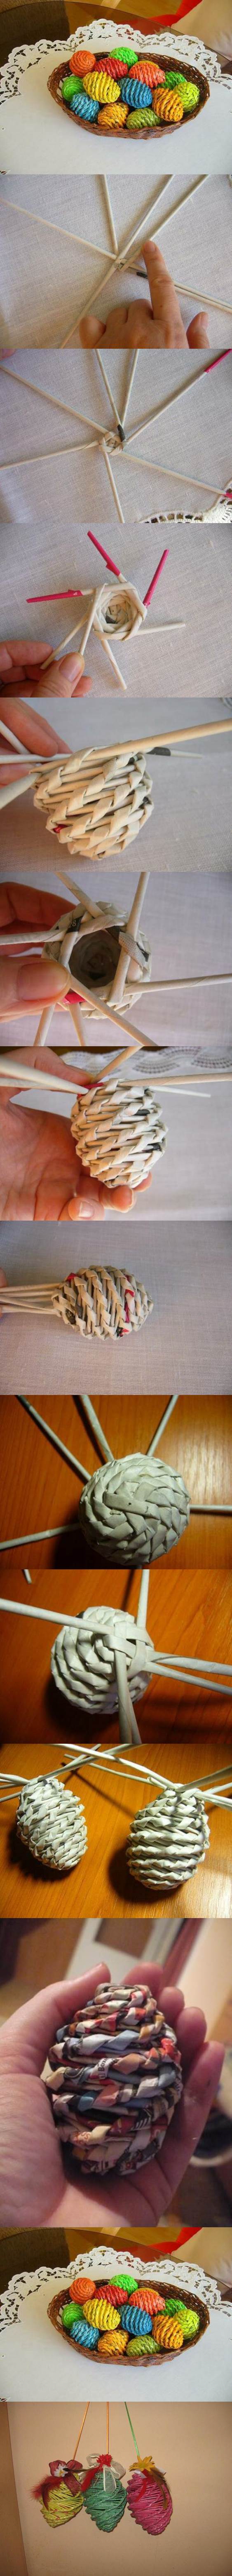 DIY Woven Paper Easter Eggs 2